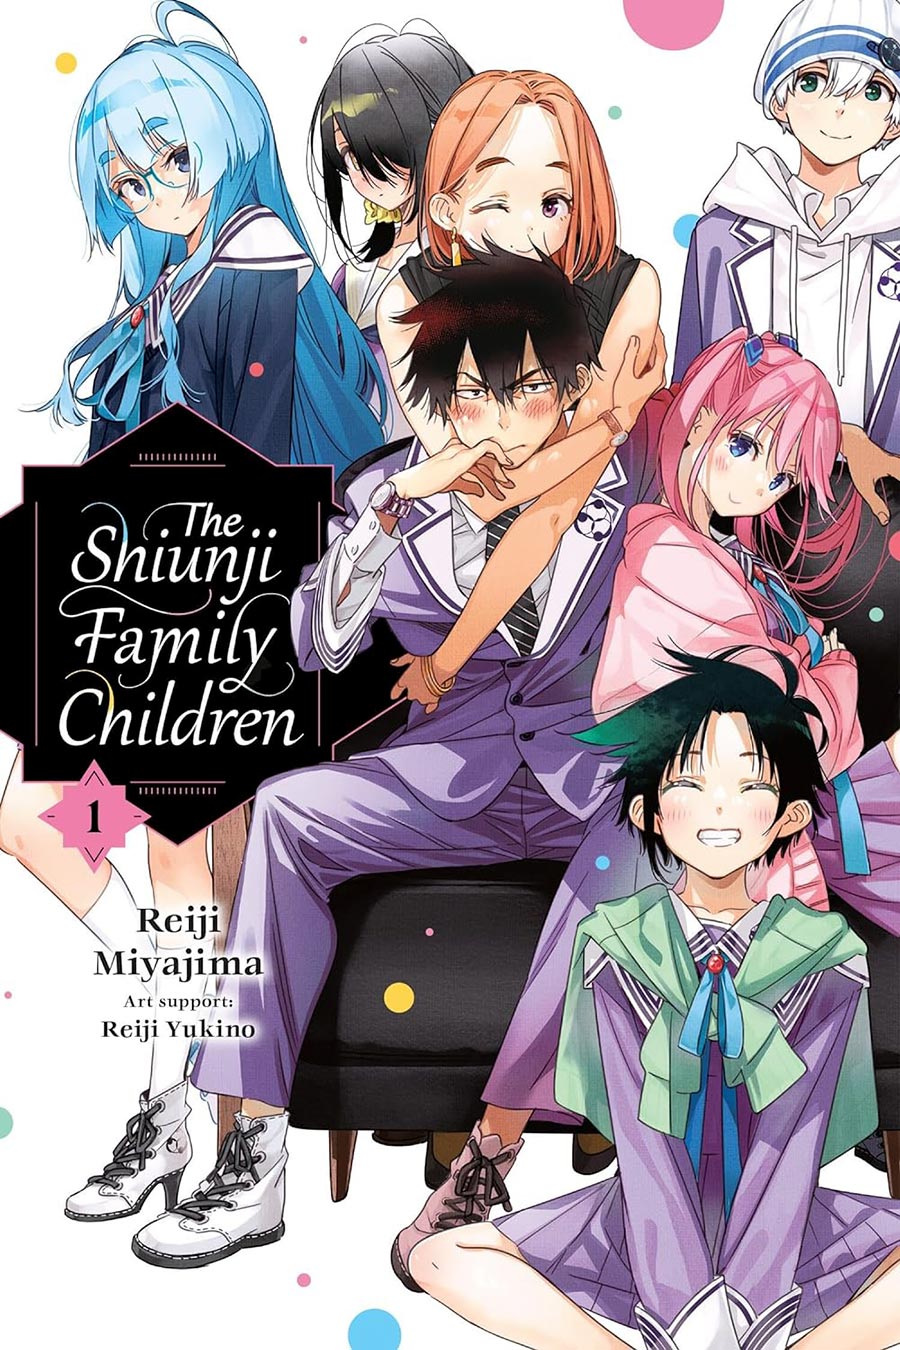 Shiunji Family Children Vol 1 GN